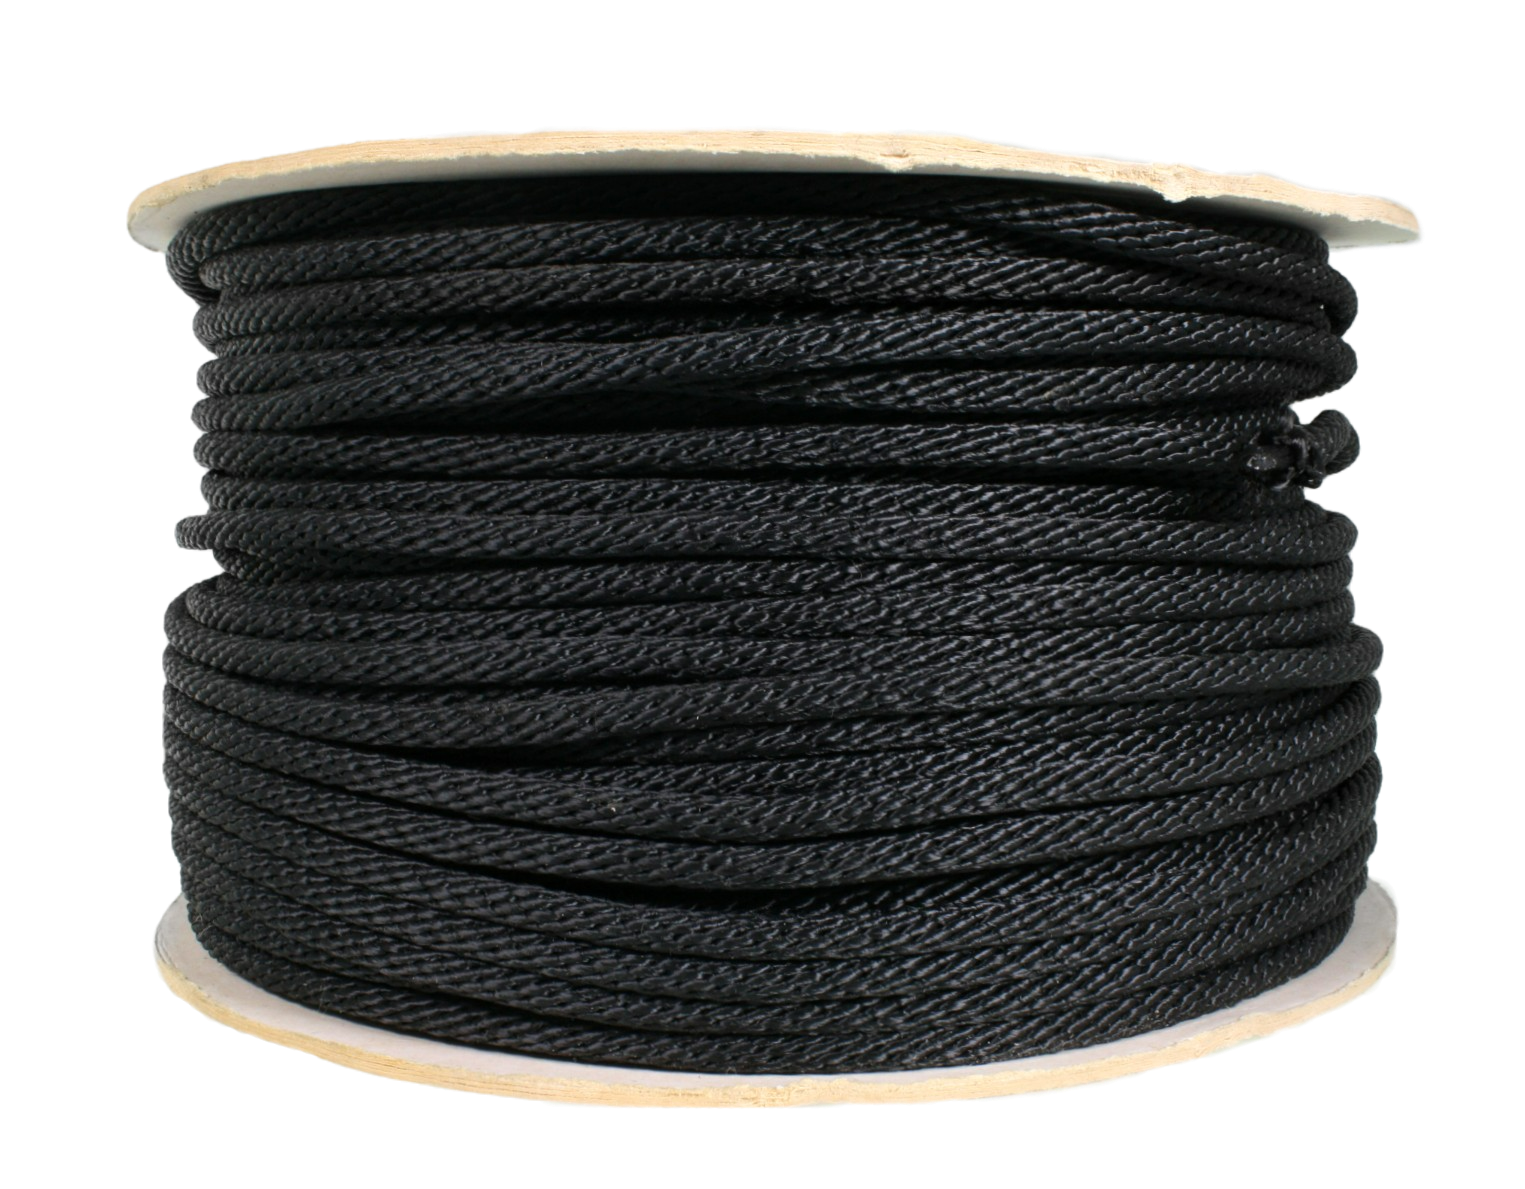 A roll of black sash cord